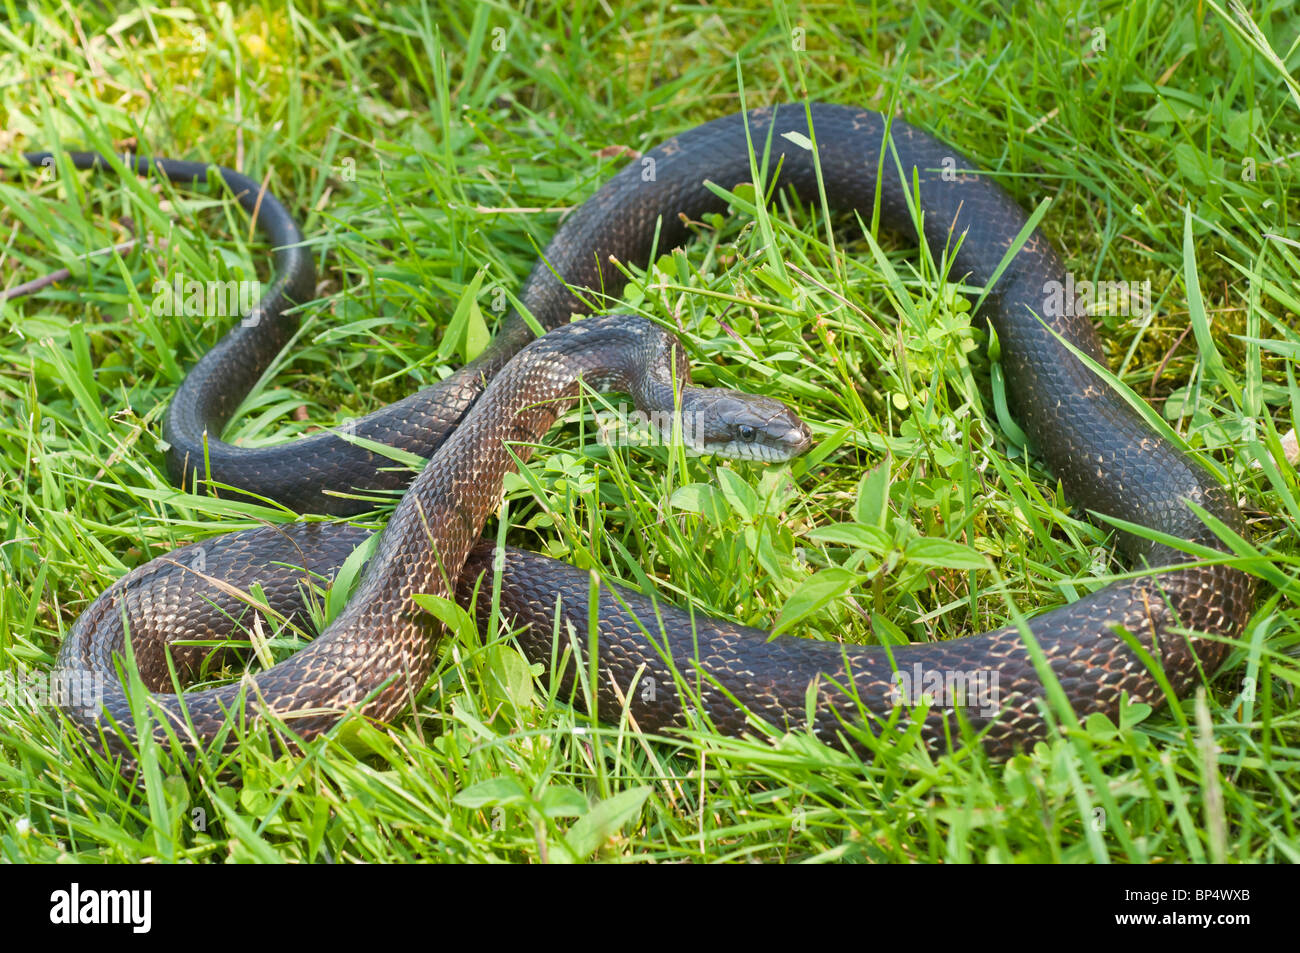 Black rat snake, Elaphe obsoleta obsoleta, native to North America Stock Photo